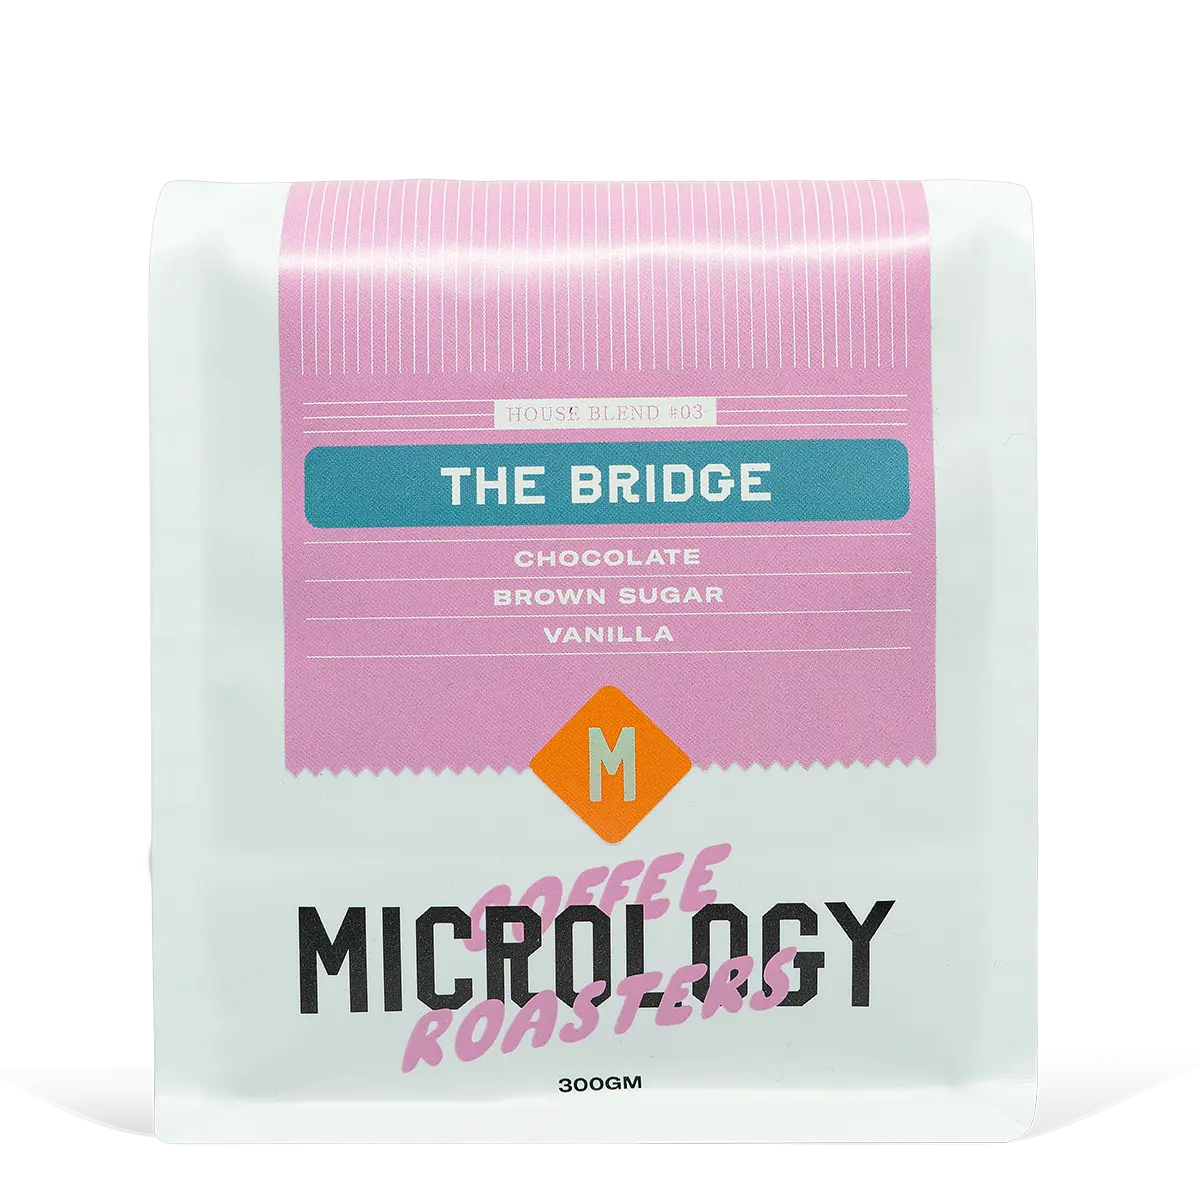 The Bridge Micrology